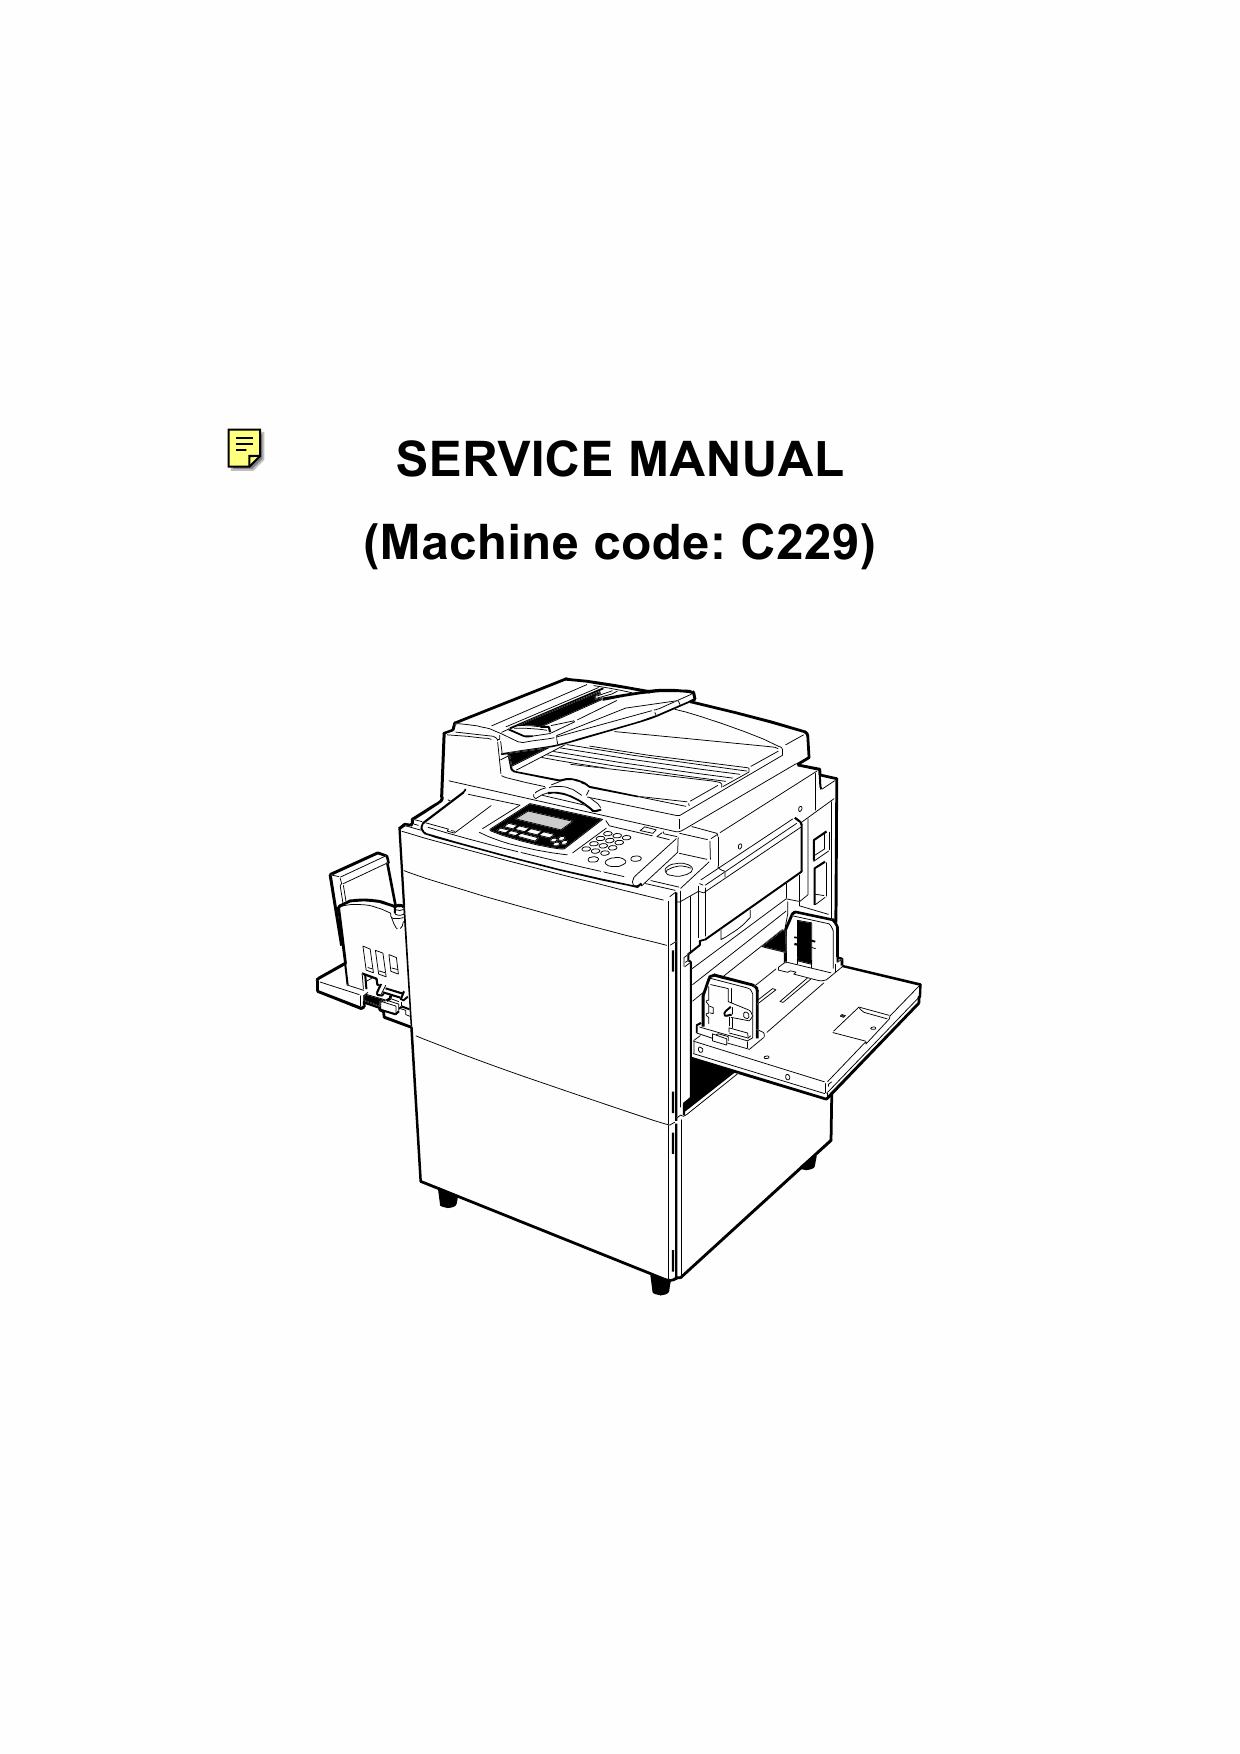 RICOH Aficio JP-5000 C229 Service Manual-1